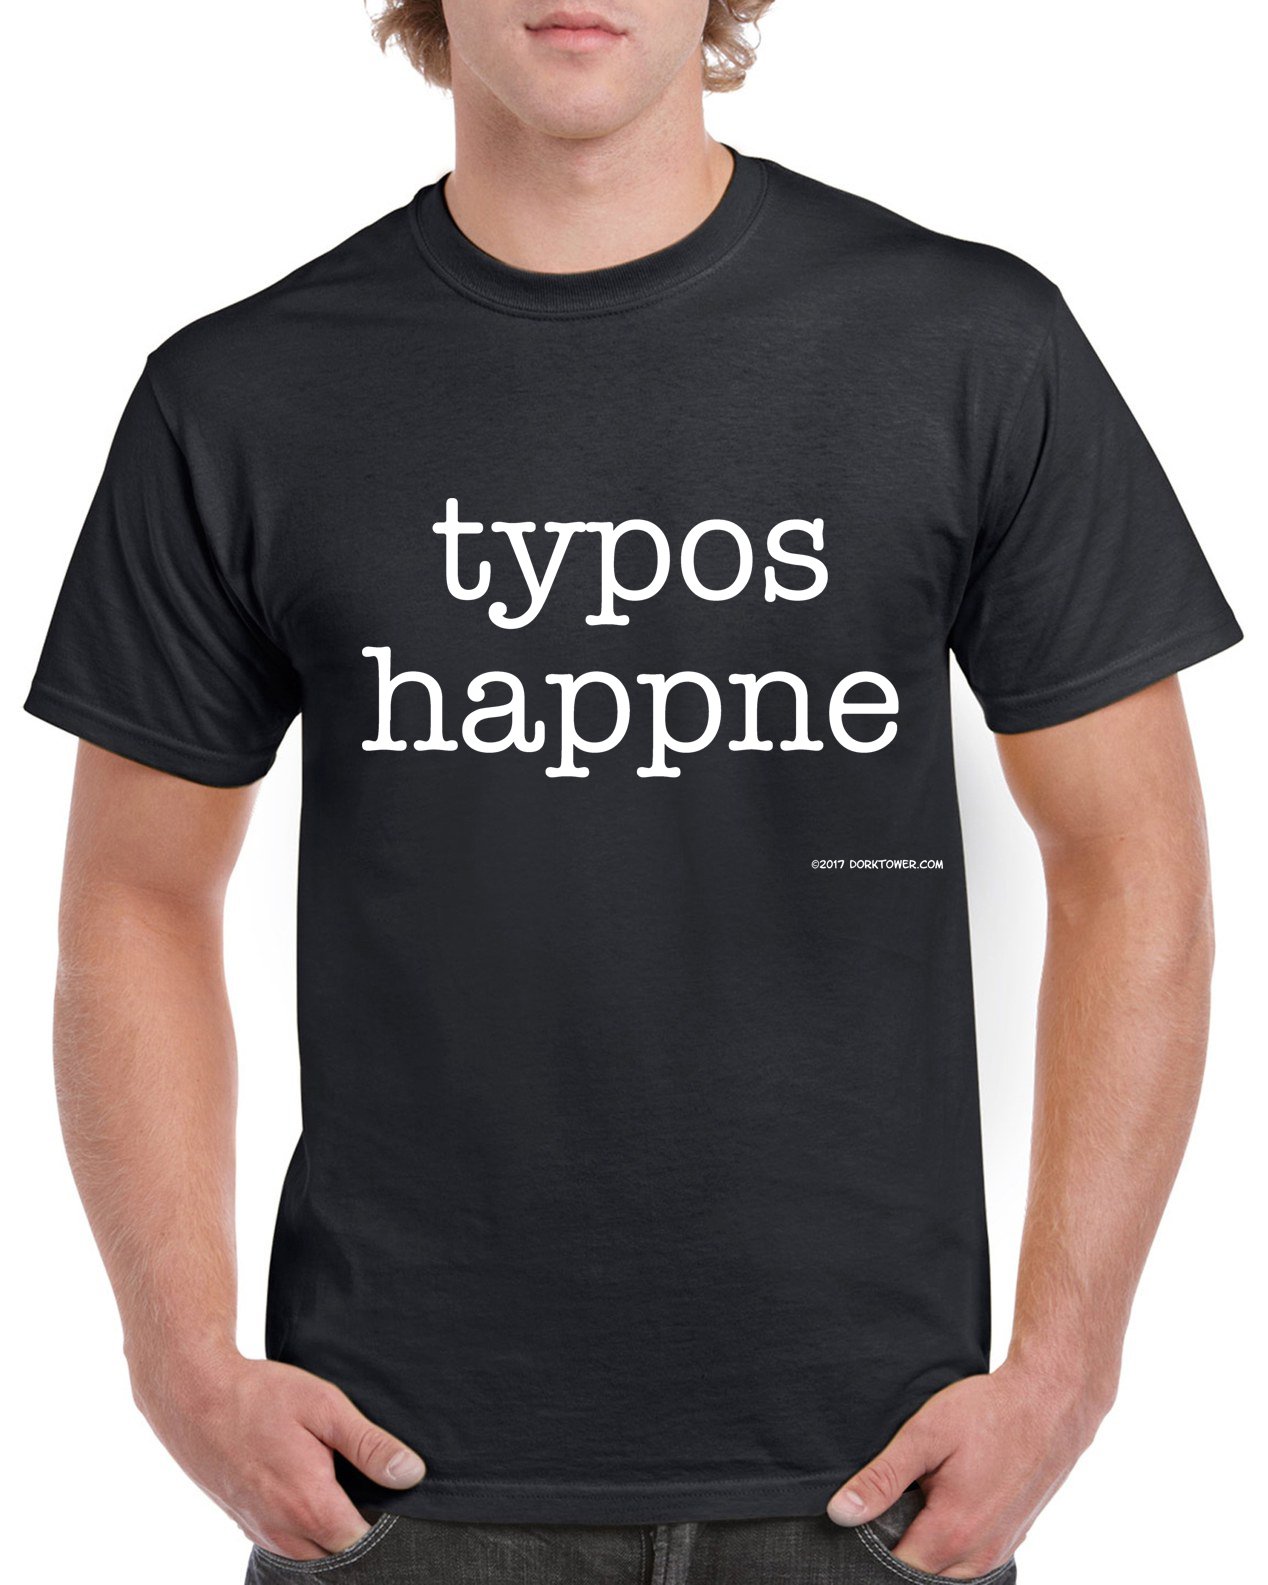 Image of Typos happne shirt